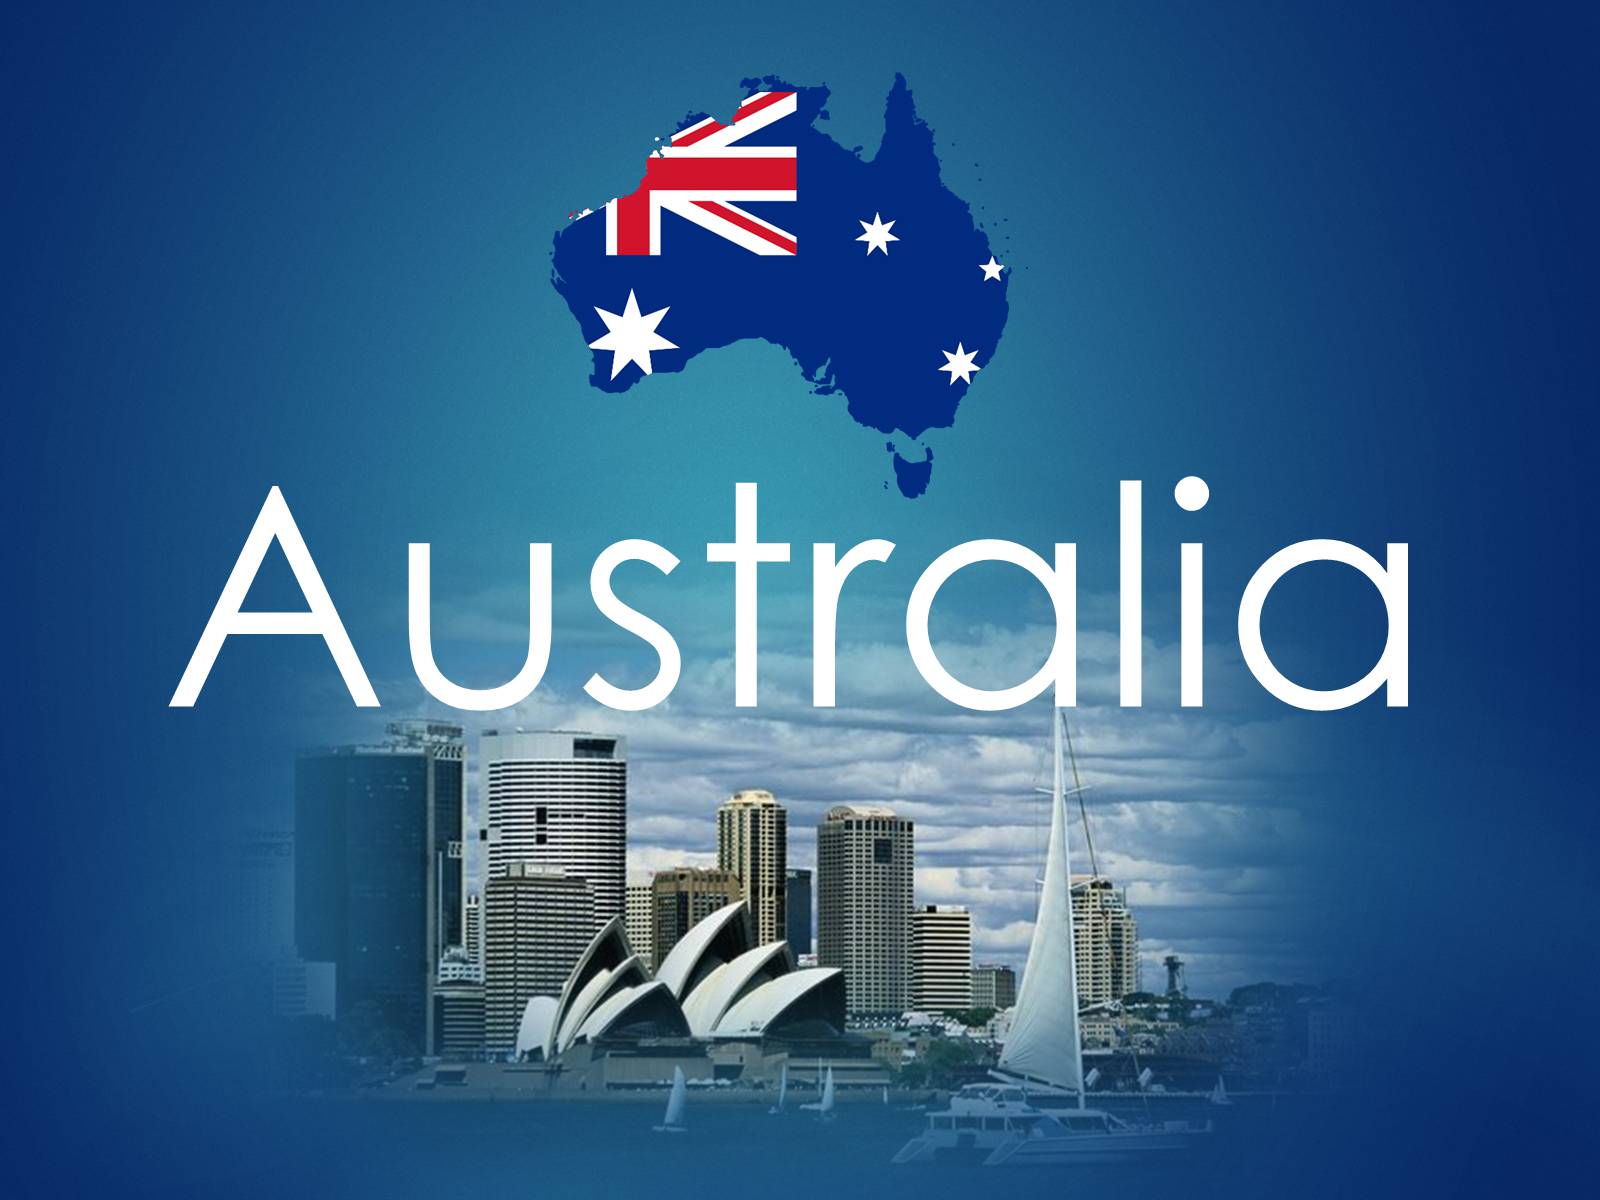 Australian name. Австралия фон для презентации. Австралия надпись. Фон для проекта про Австралию. Австралия на англ.